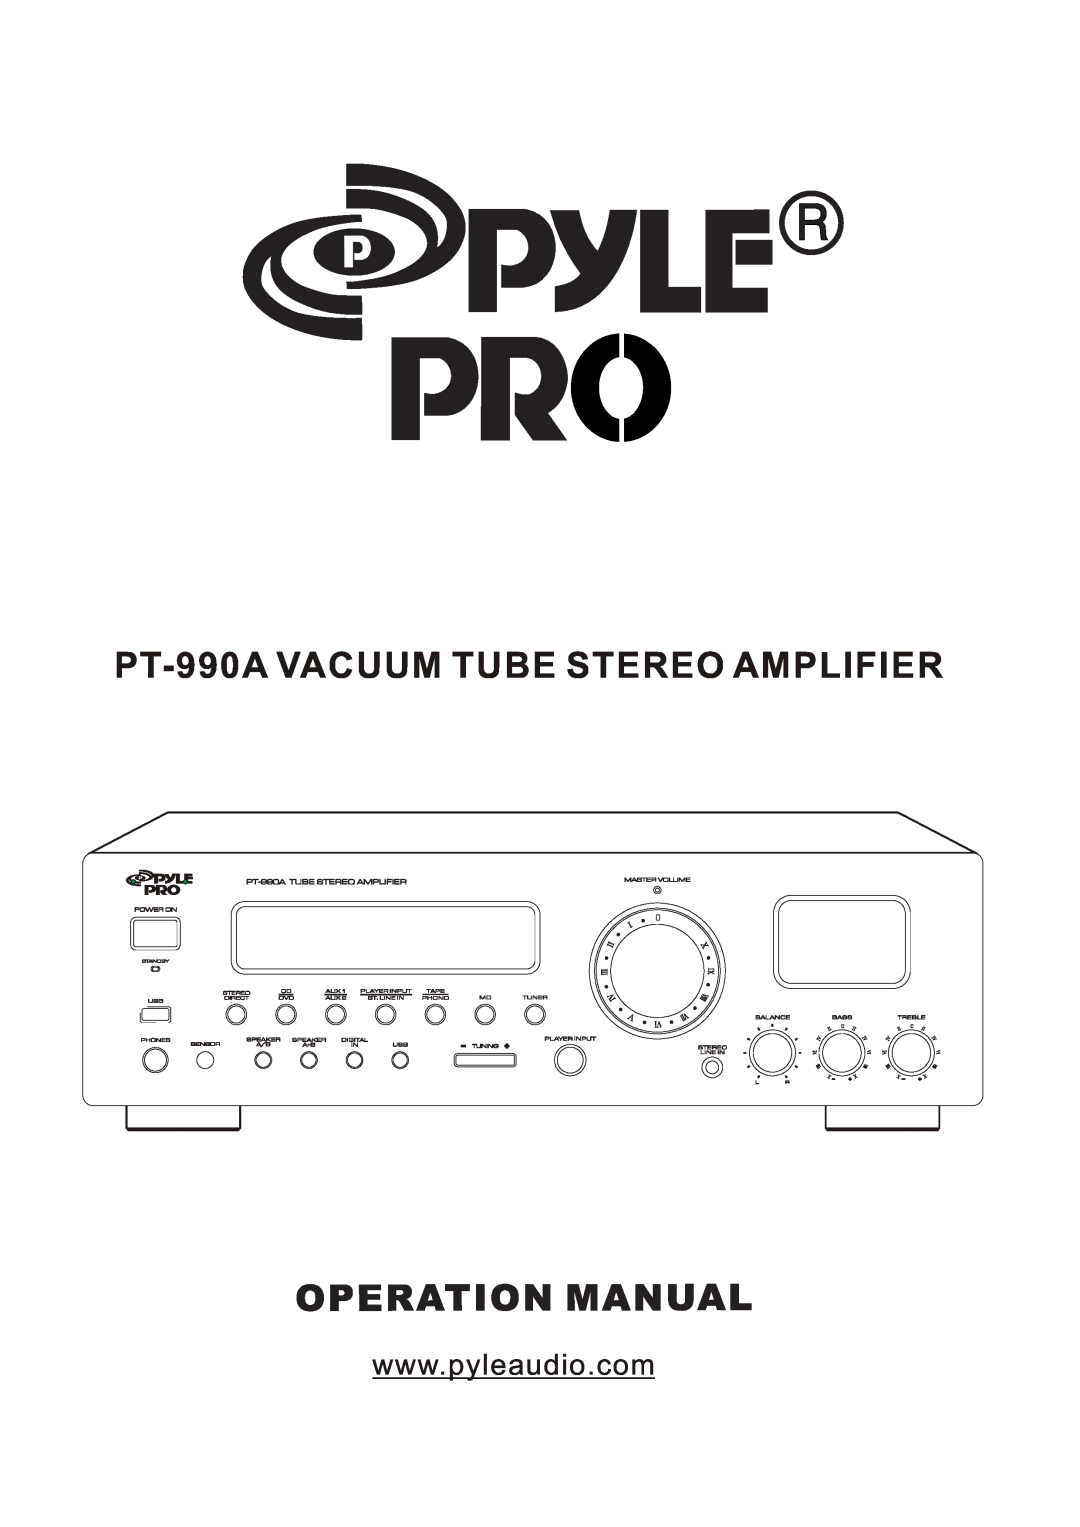 Radio Shack manual PT-990AVACUUM TUBE STEREO AMPLIFIER, Power On, Master Volume, Bass 